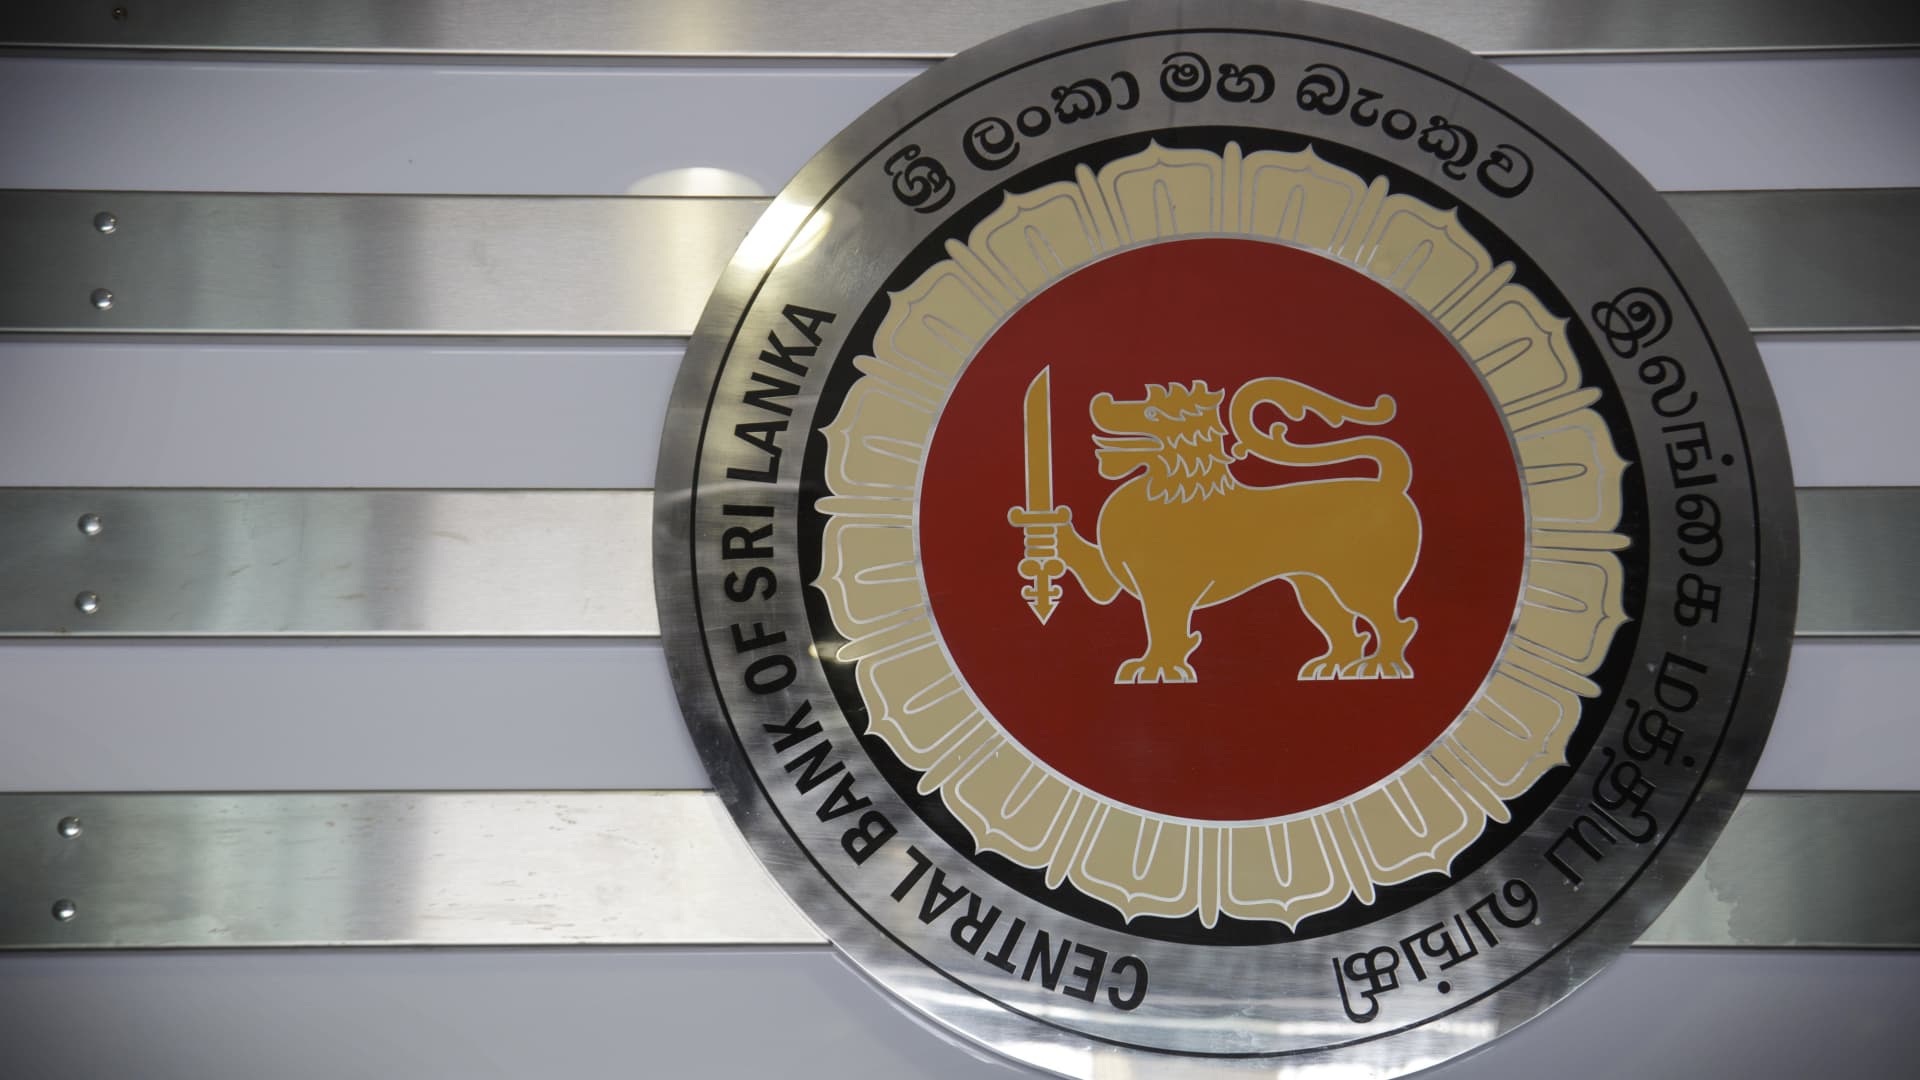 Signage for the Central Bank of Sri Lanka in Colombo, Sri Lanka.